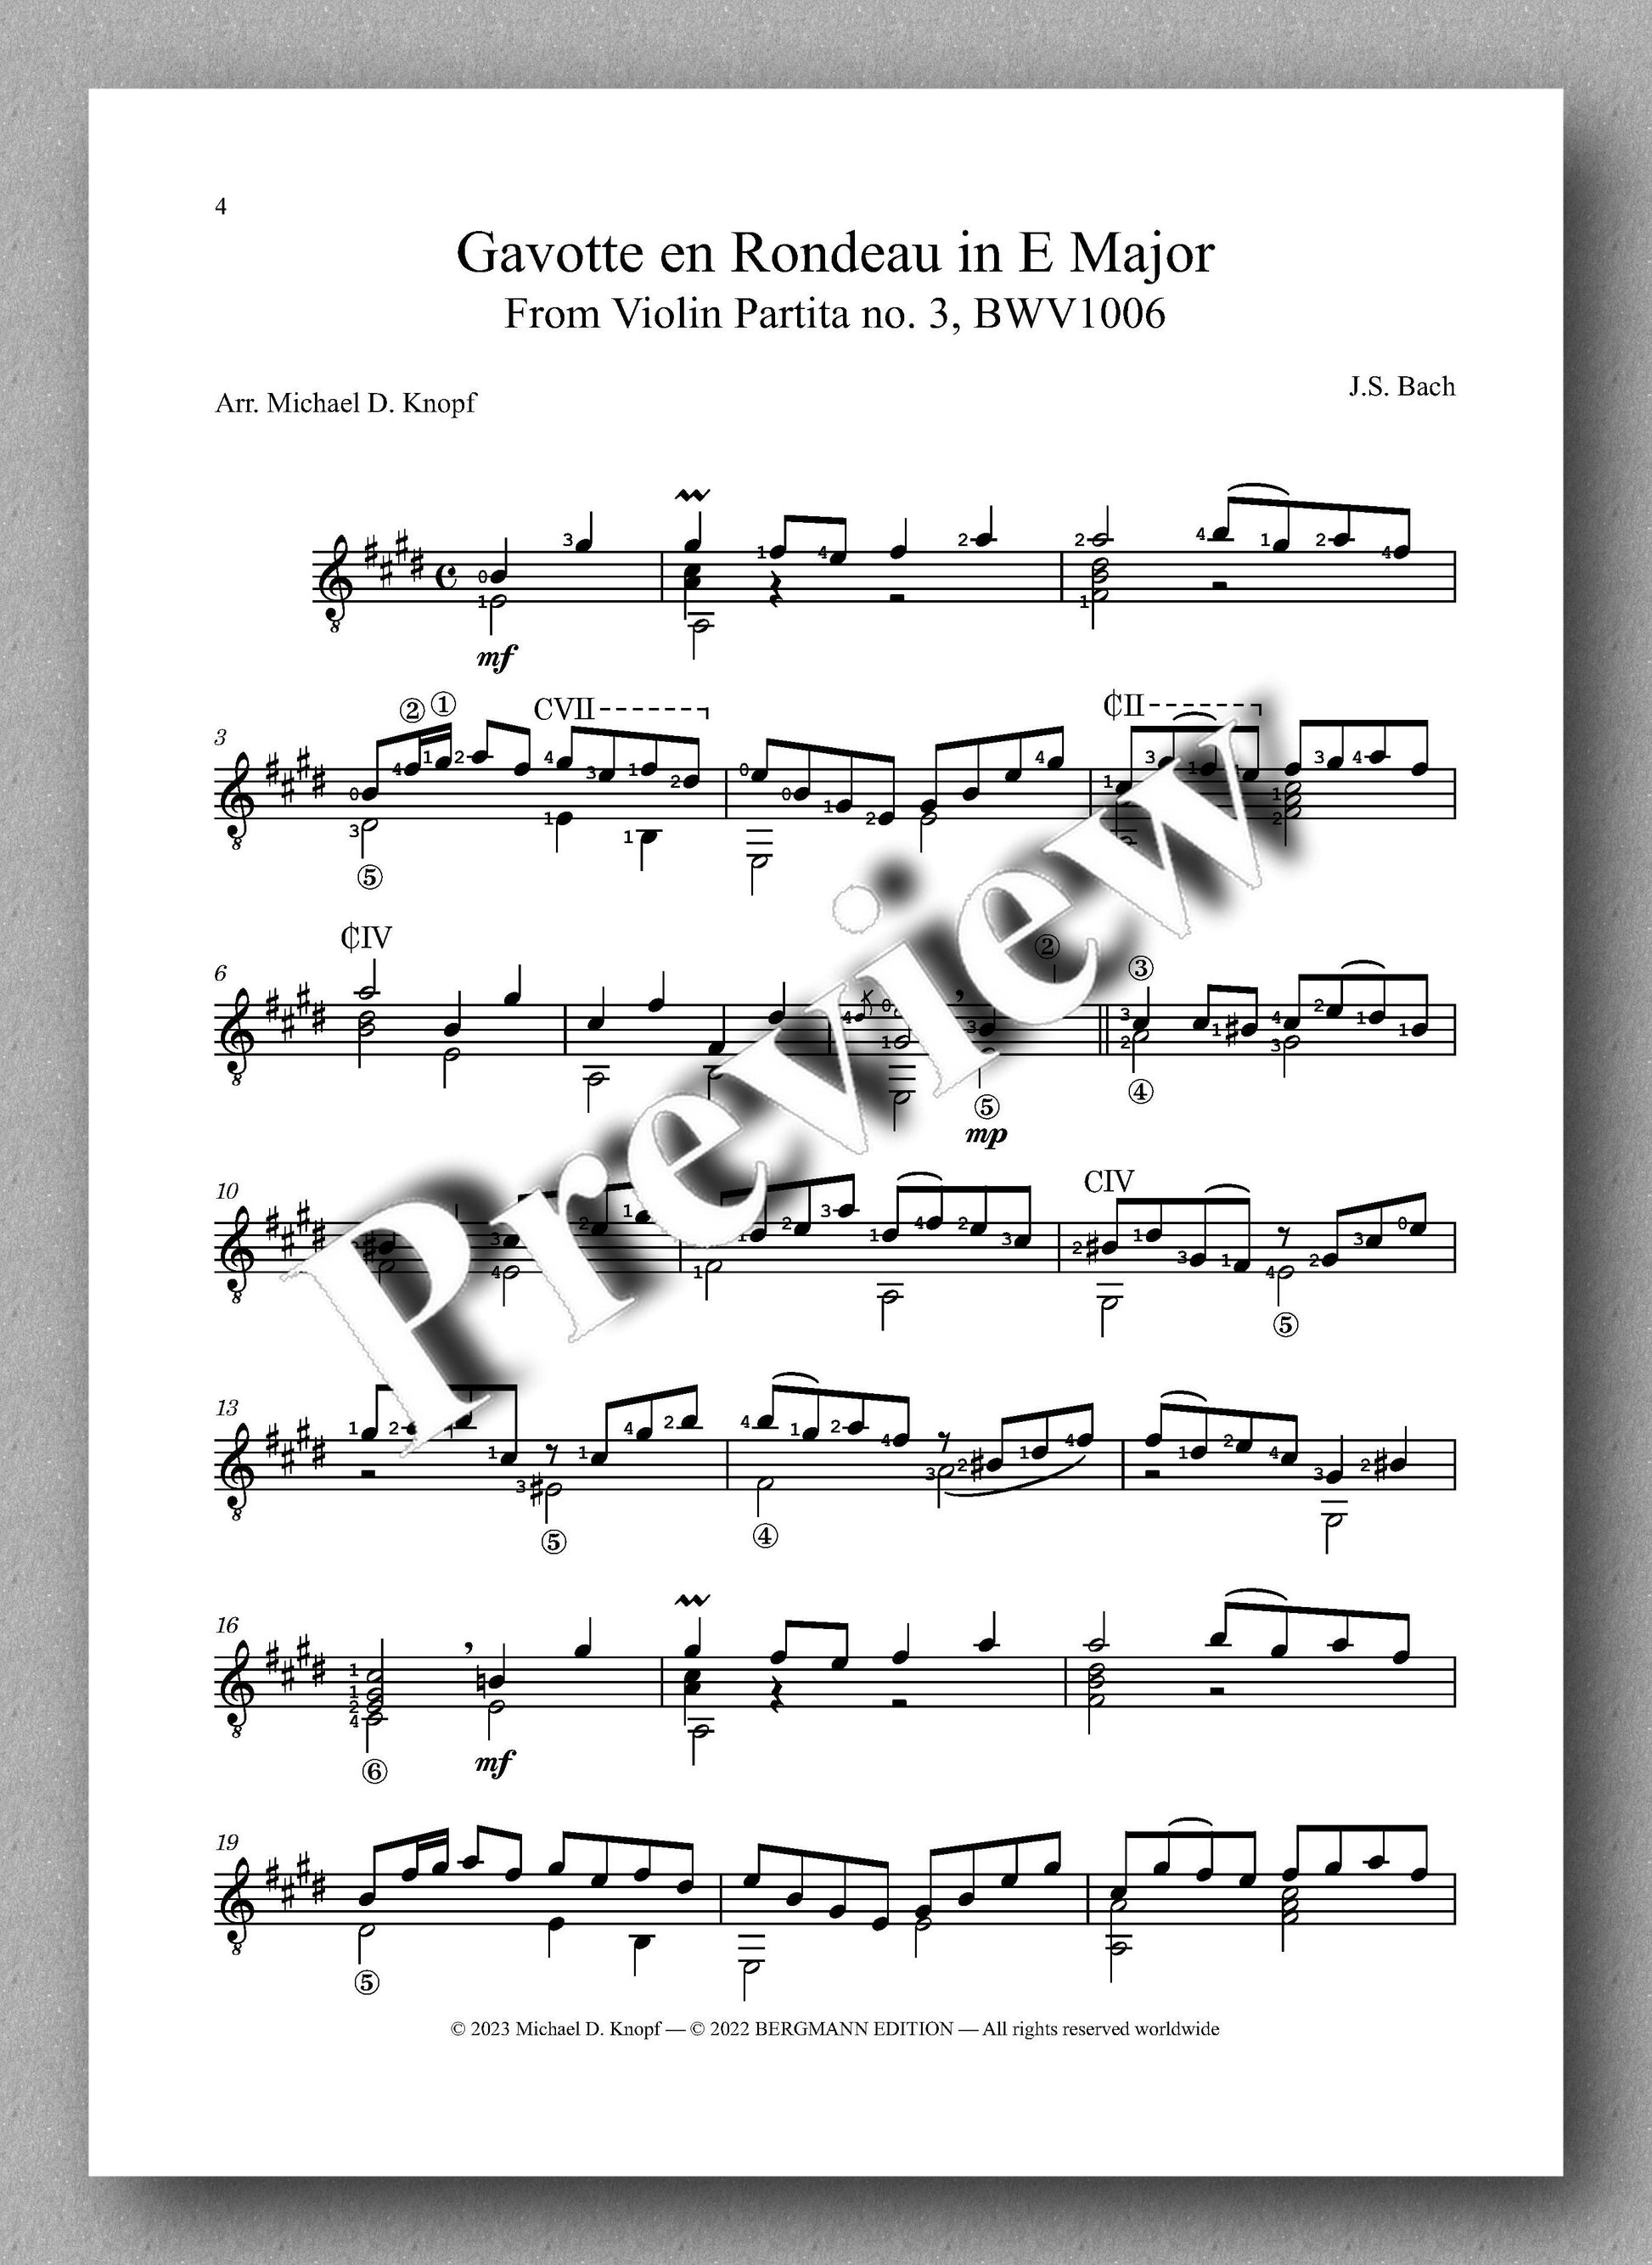 J.S.Bach, Gavotte en Rondeau in E Major, BWV 1006 - preview of the music score 1